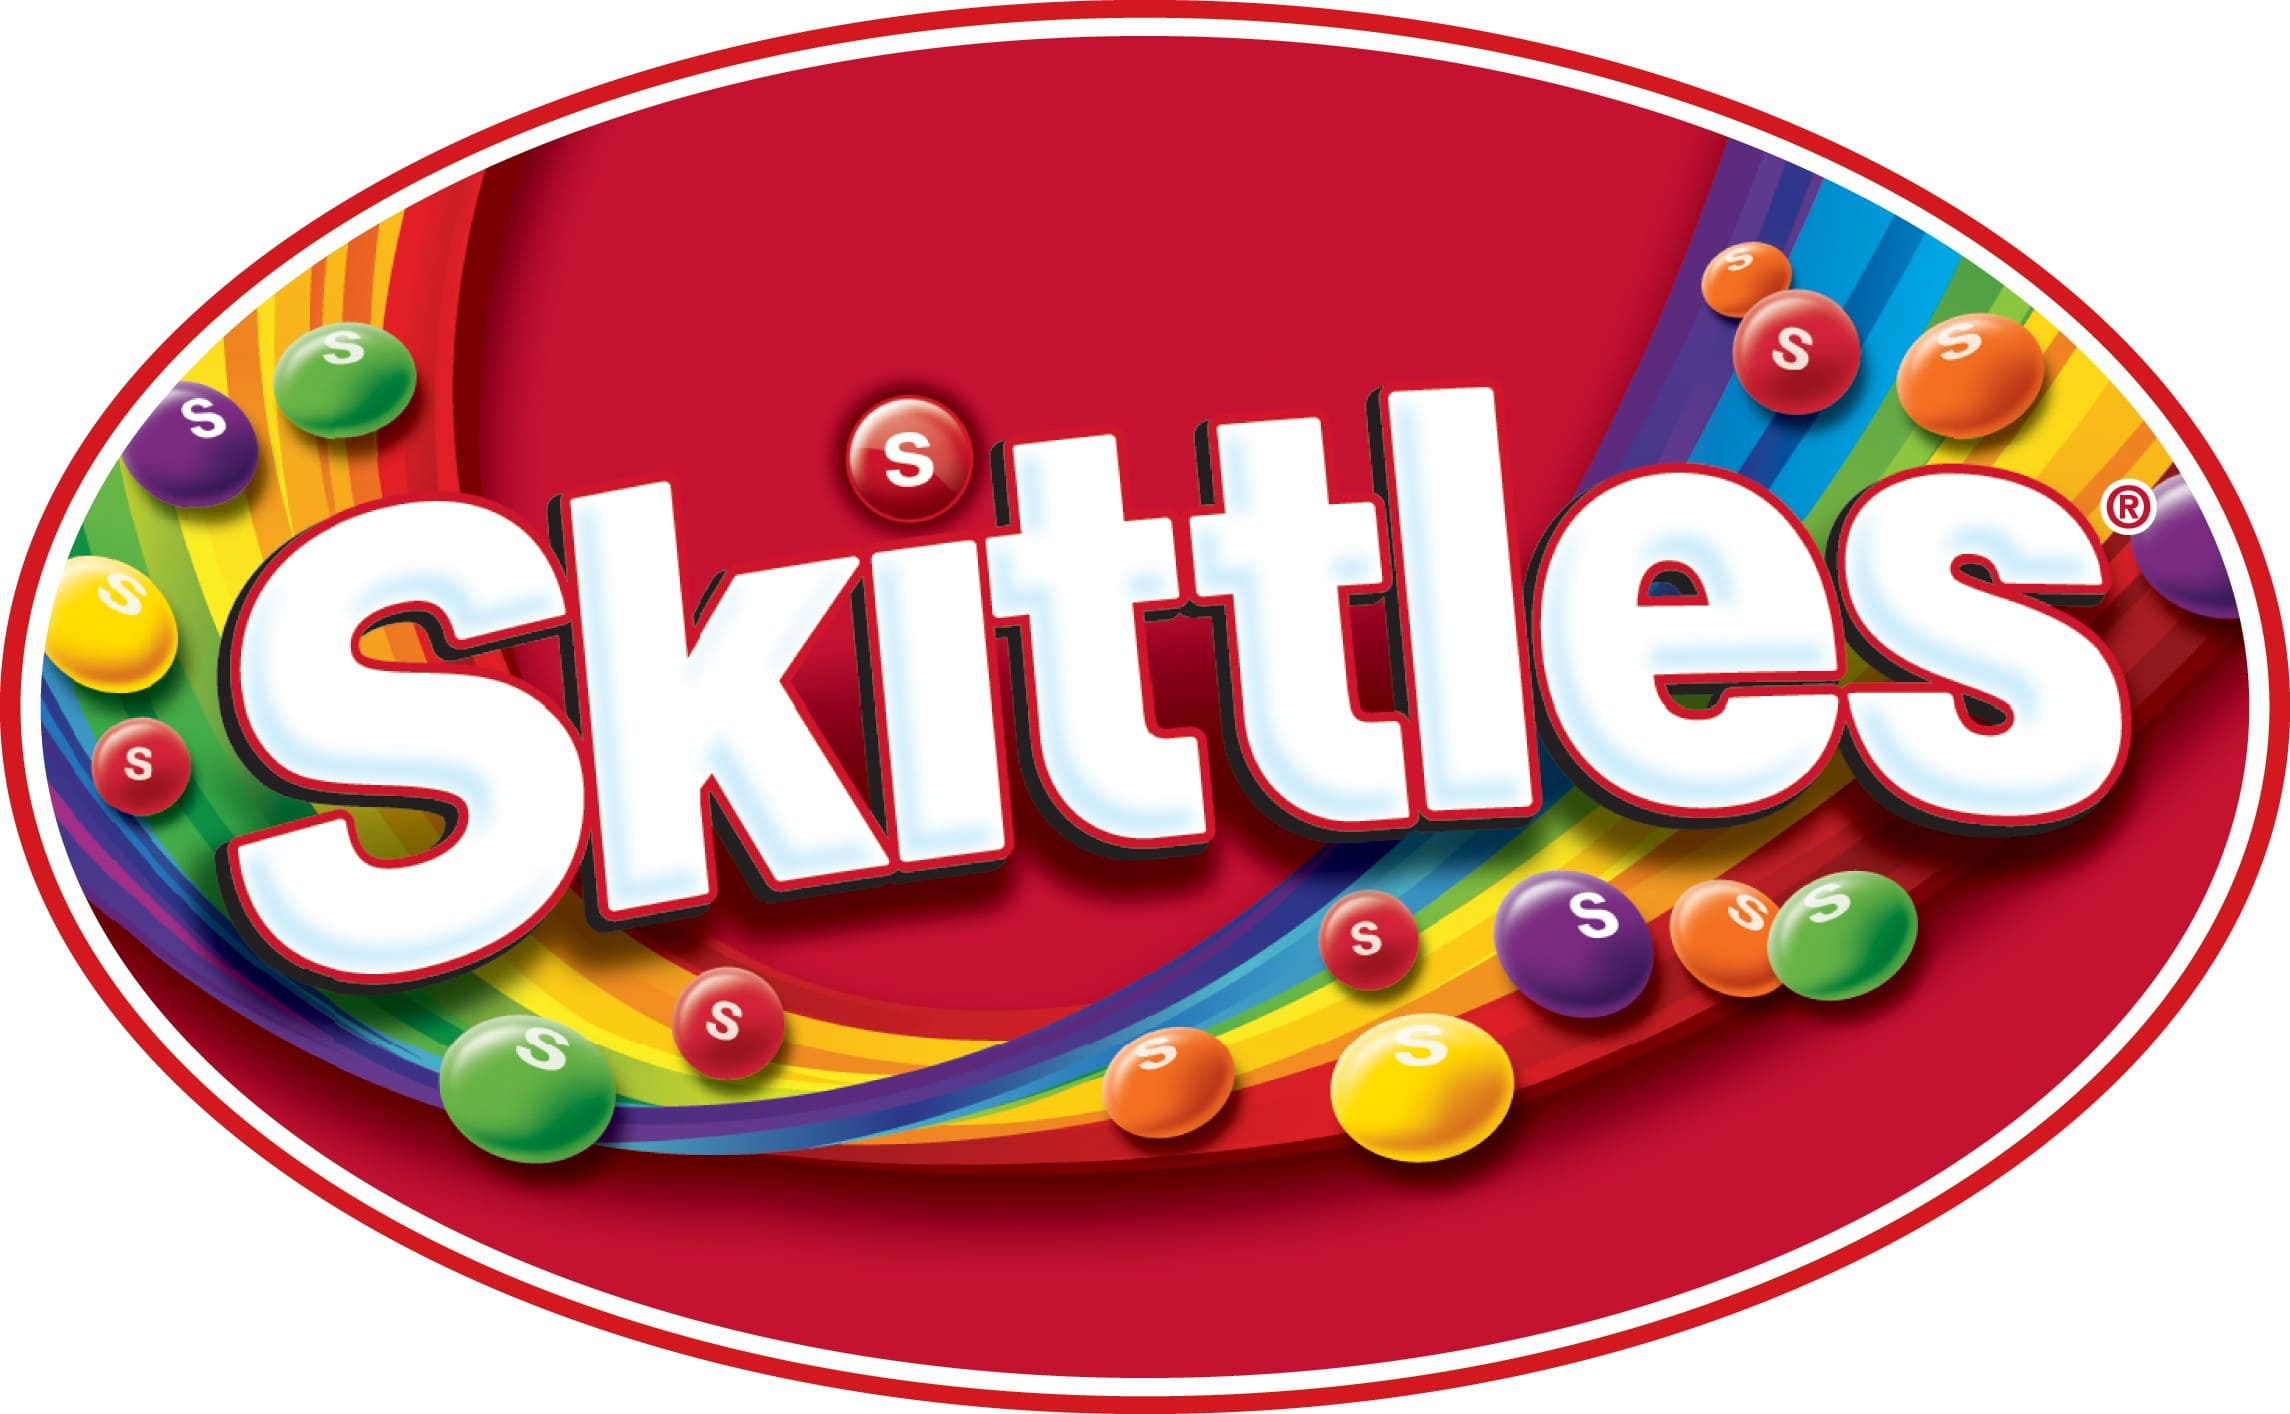 Skittles singapore